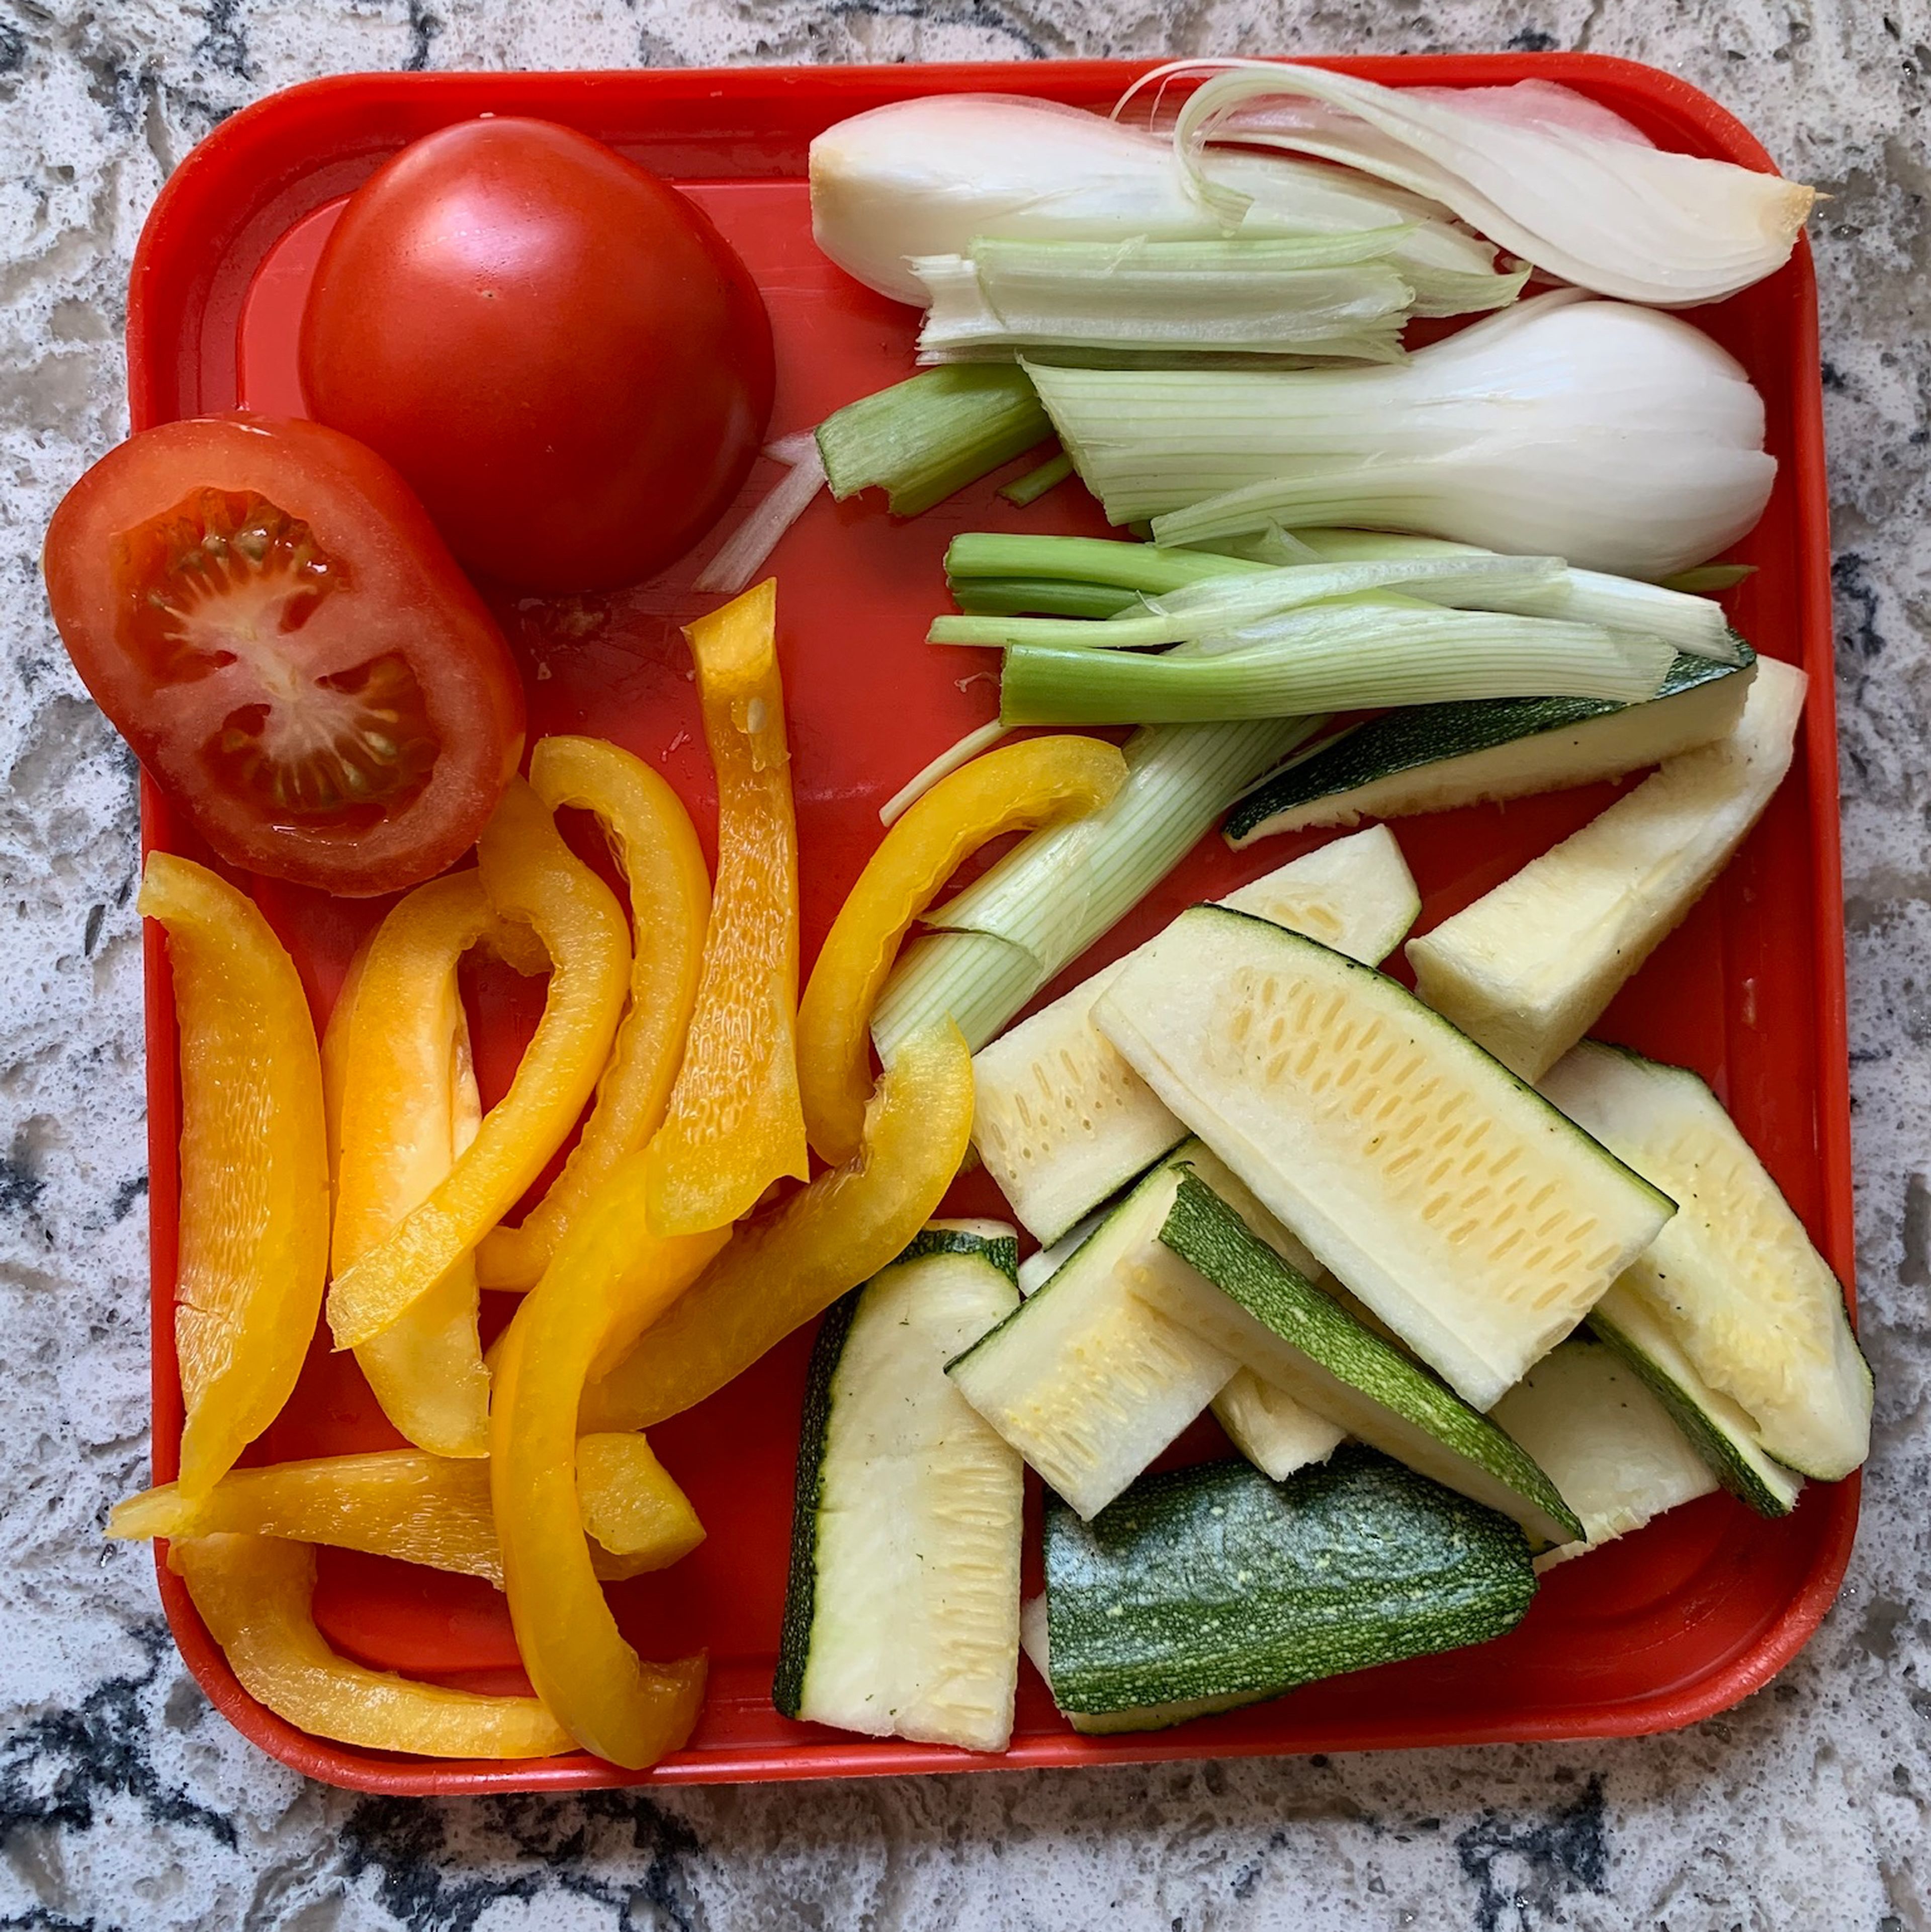 Cut vegetables into smaller pieces (as shown).